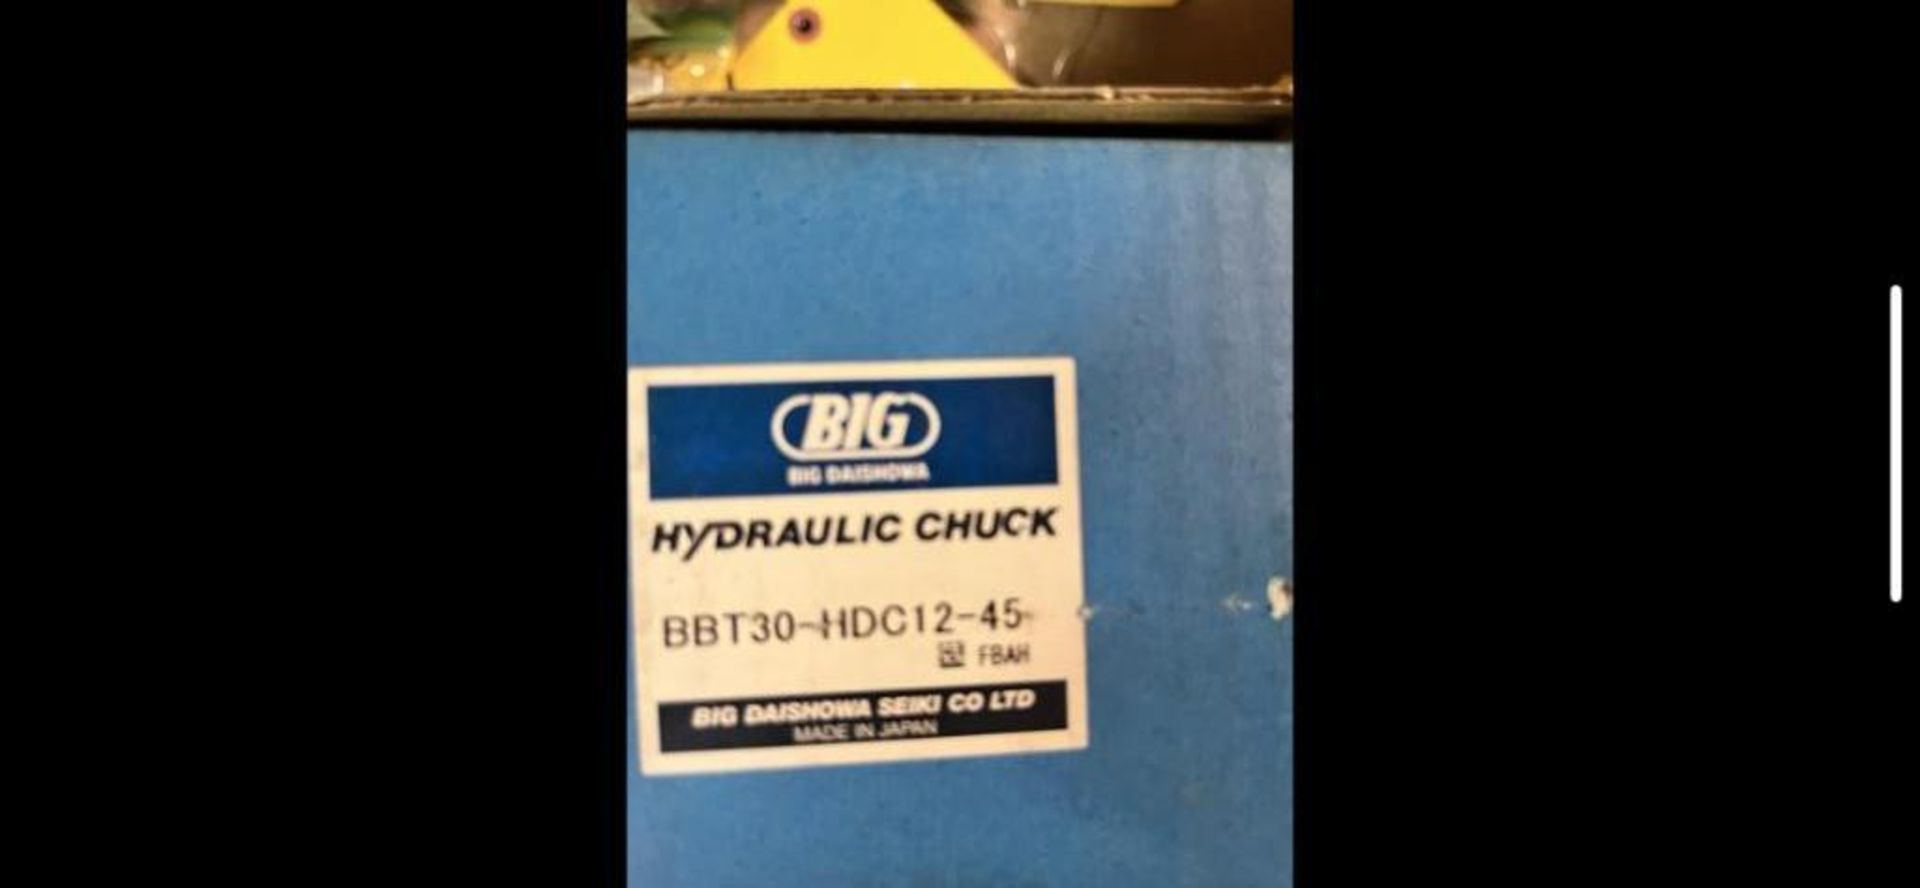 Big Daishowa Hydraulic Chuck, BBT30-HDC12-45 - Image 3 of 4